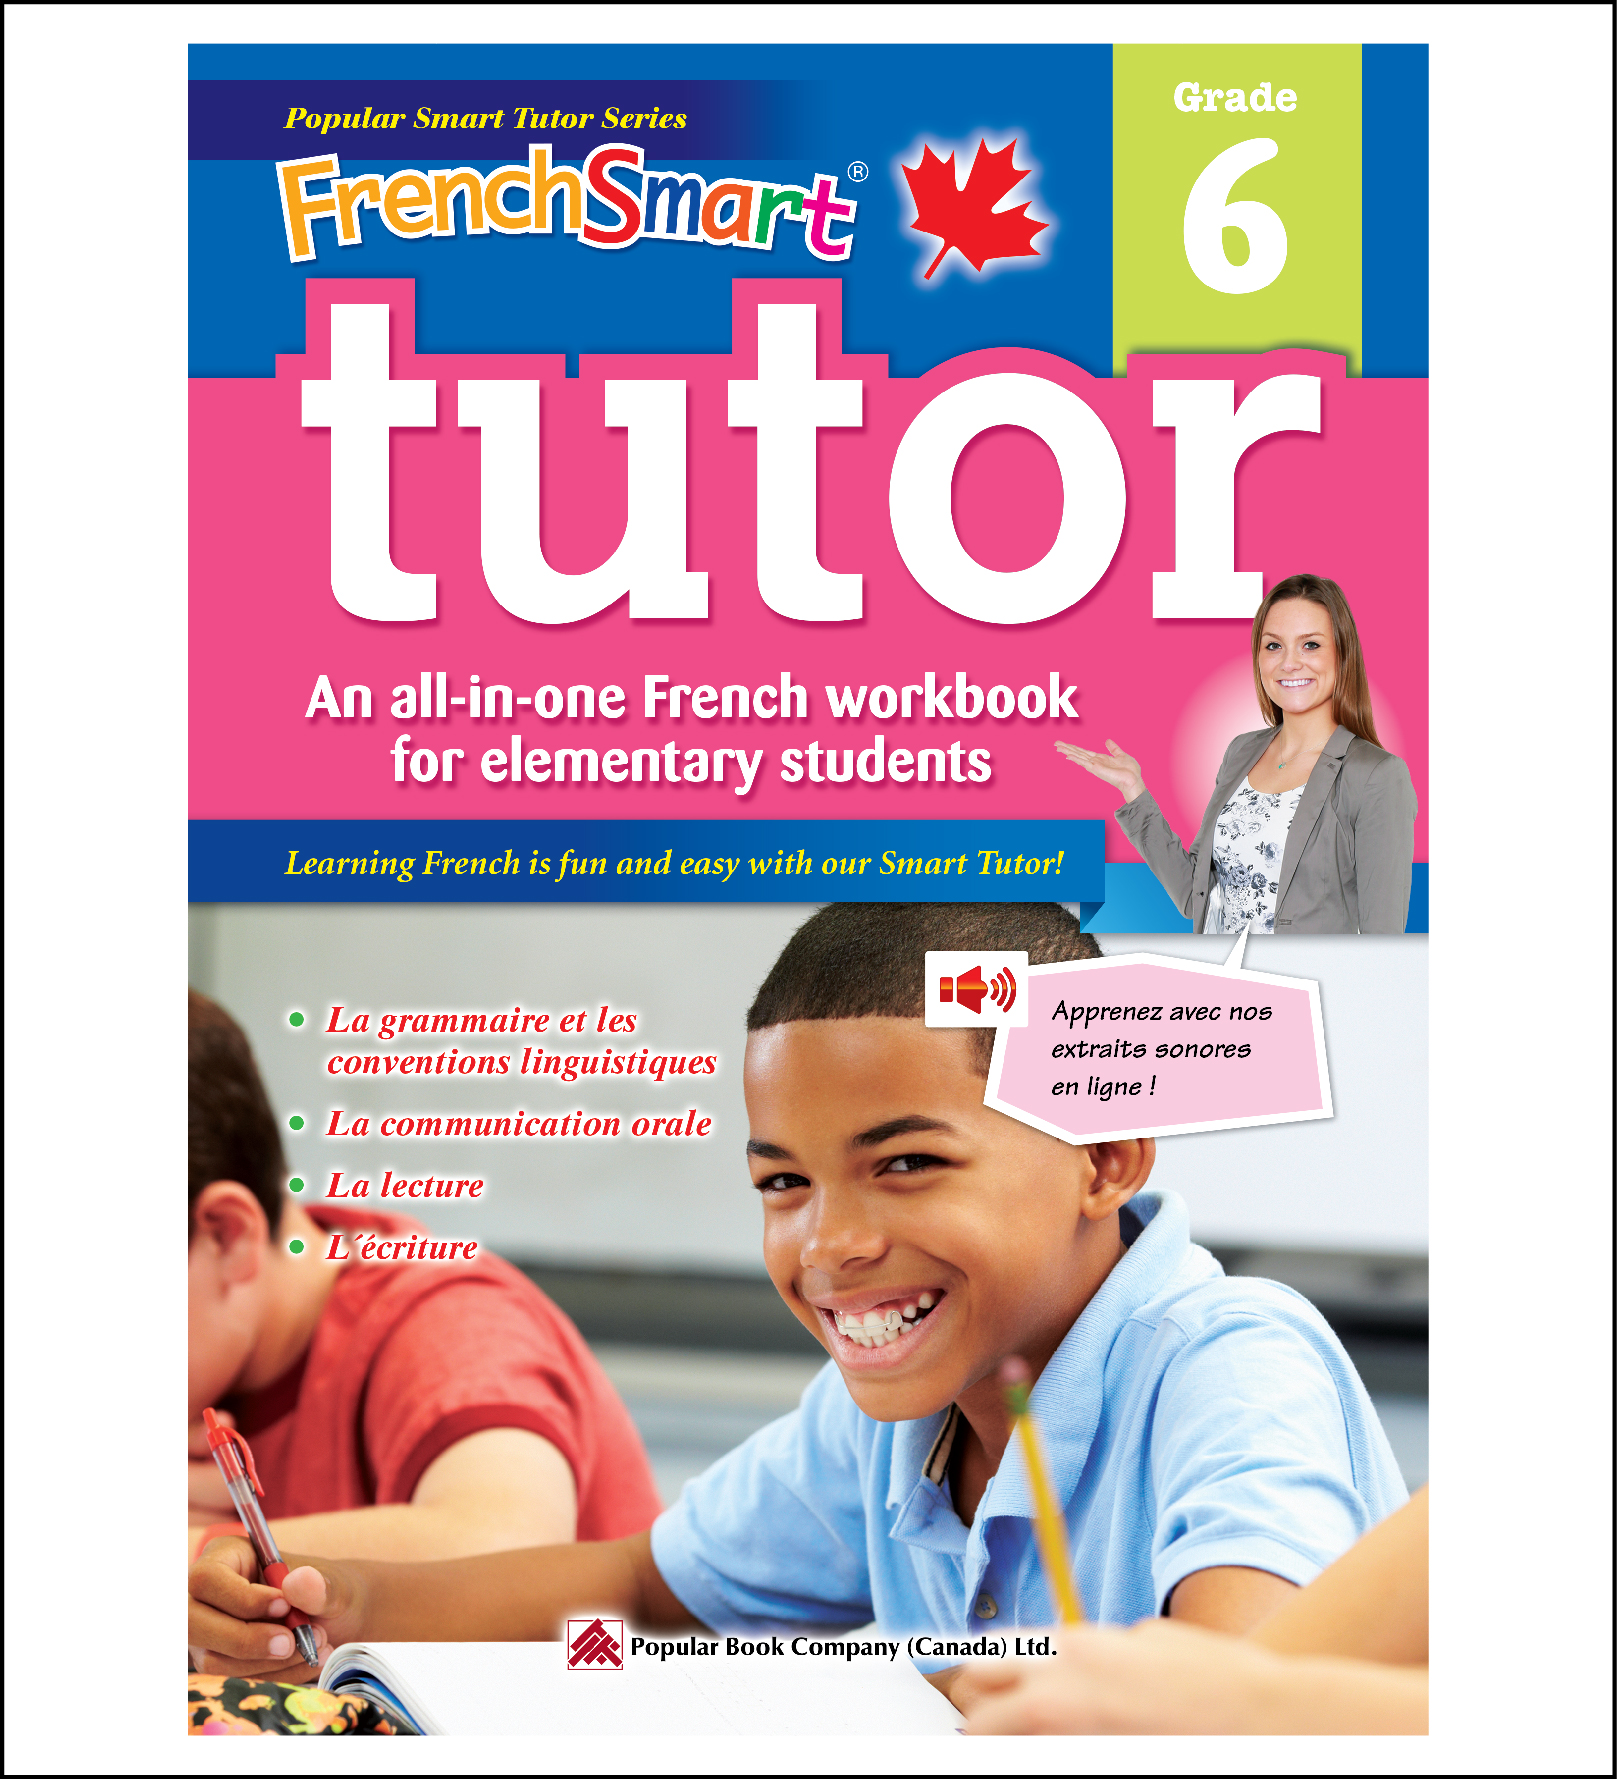 French tutor